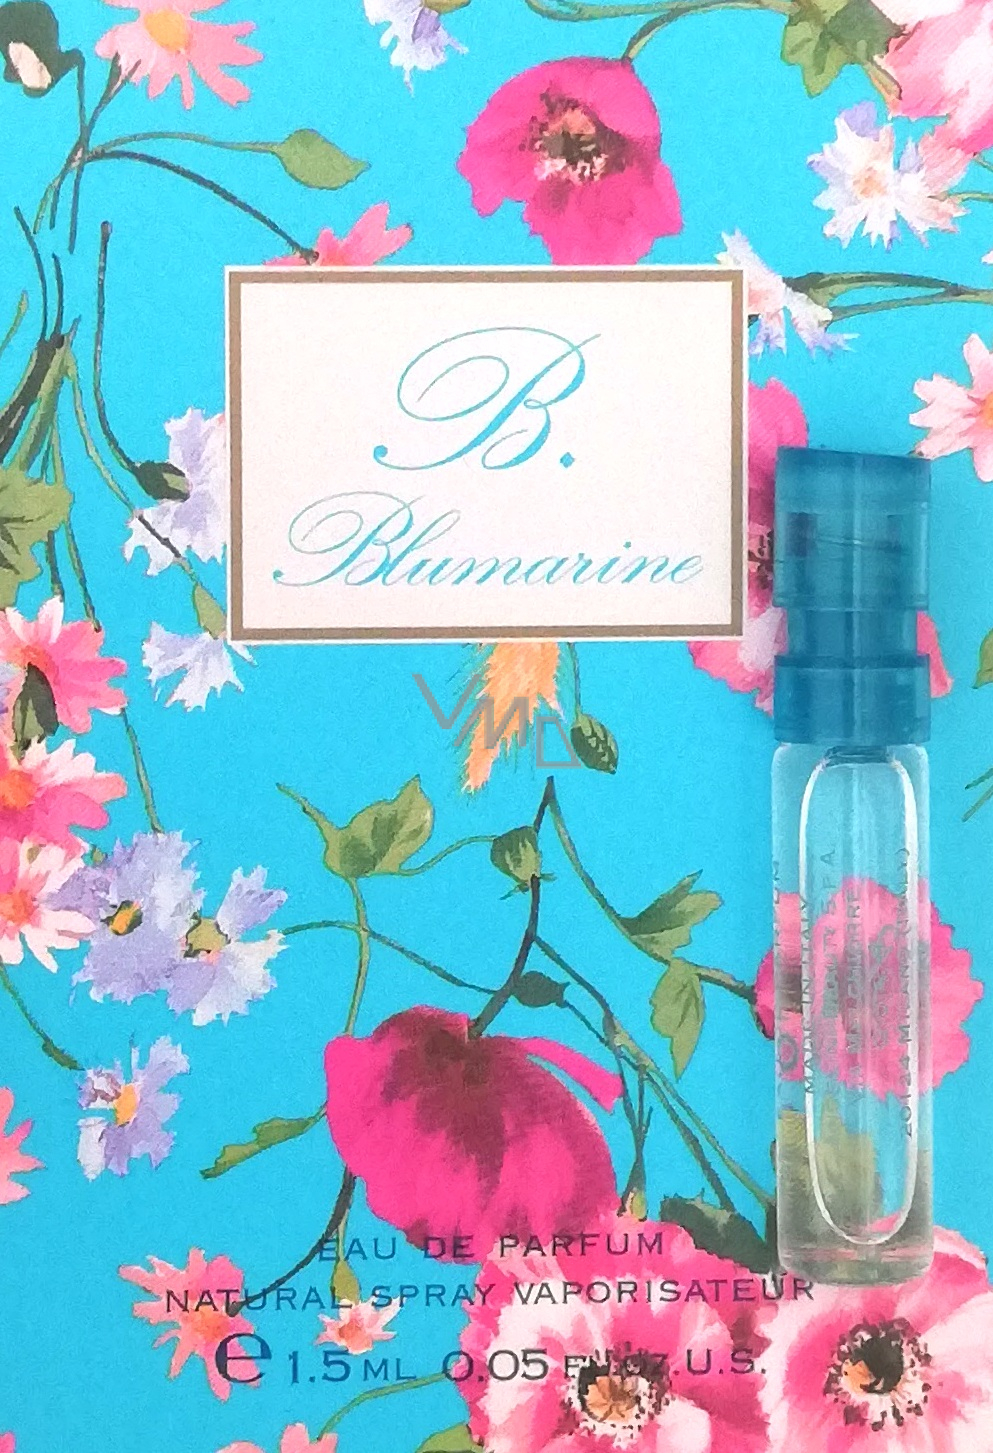 Blumarine B. Blumarine perfumed water for women 1.5 ml with spray